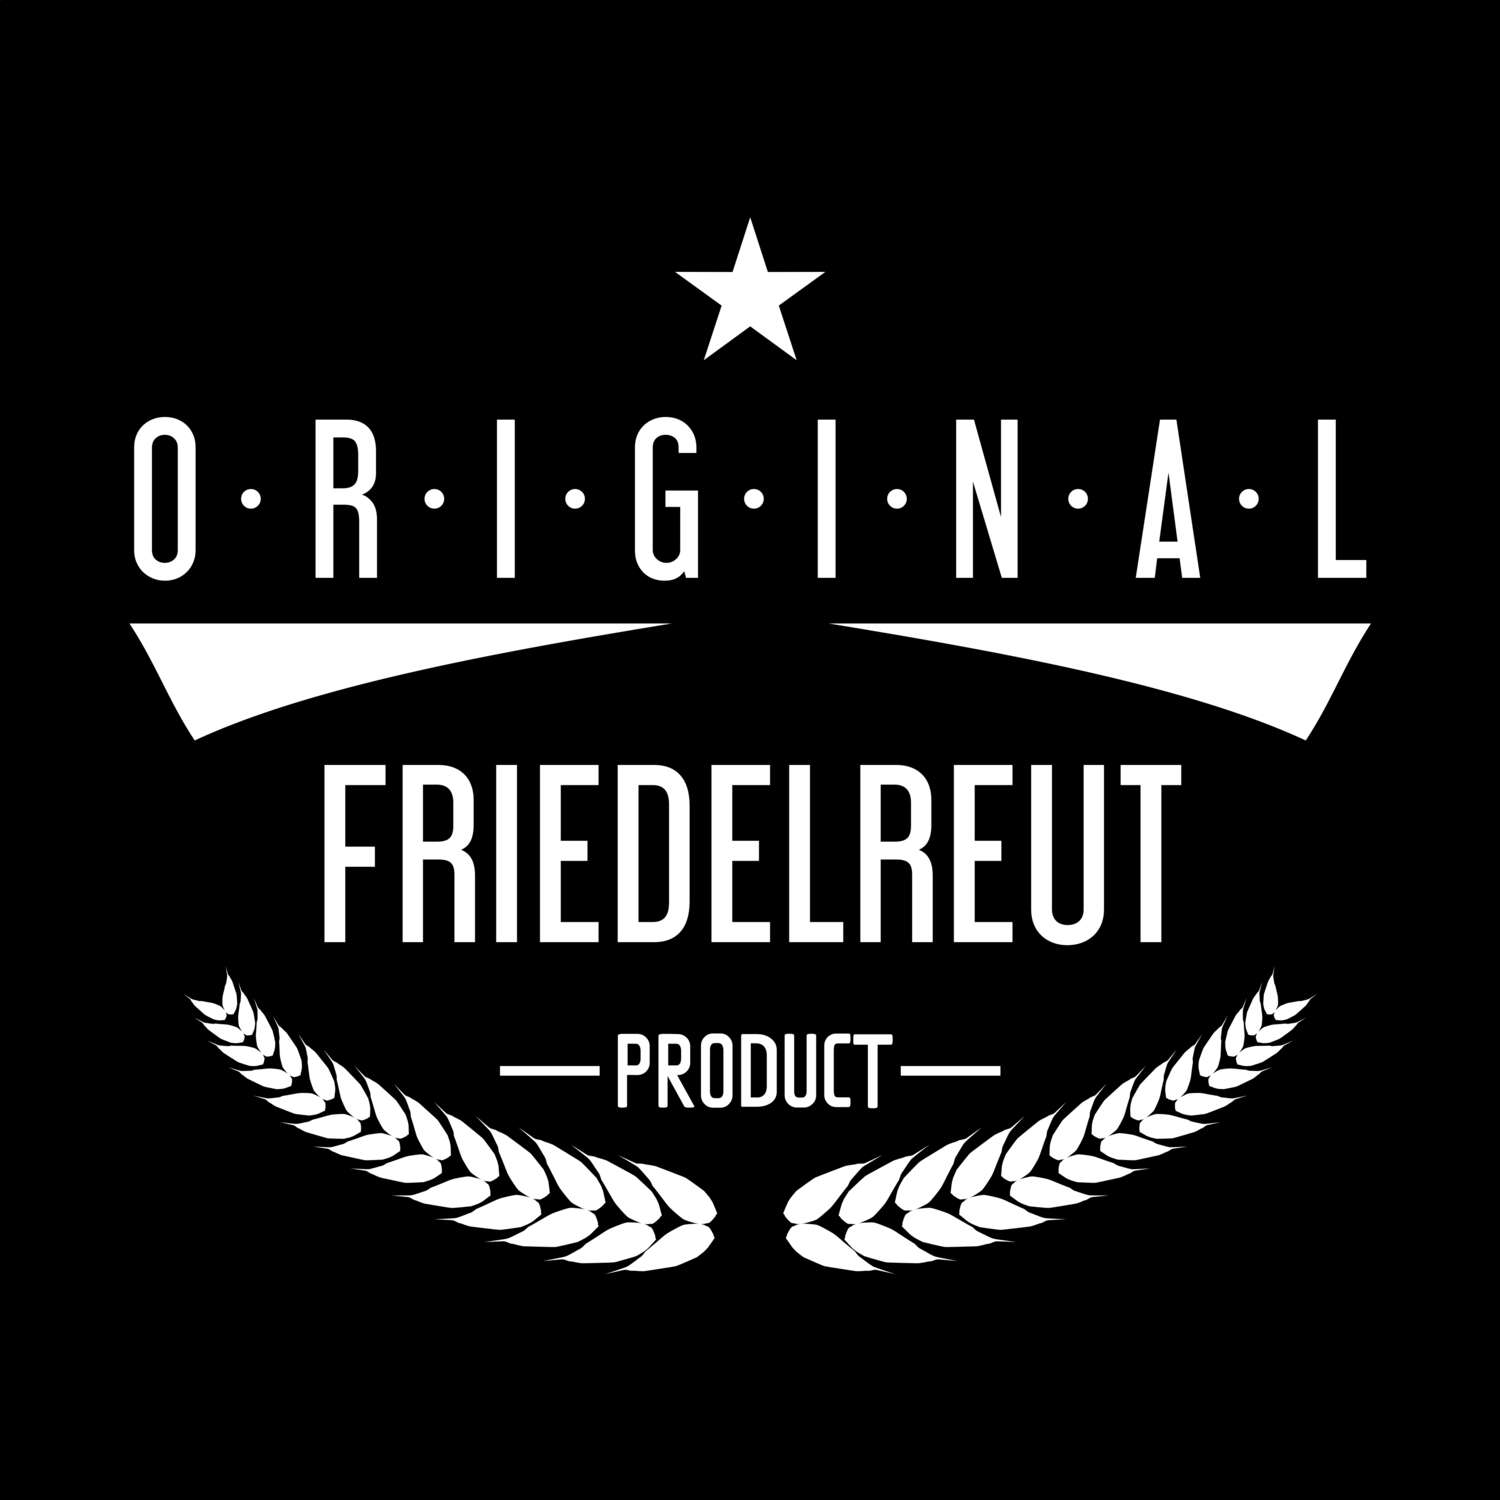 Friedelreut T-Shirt »Original Product«